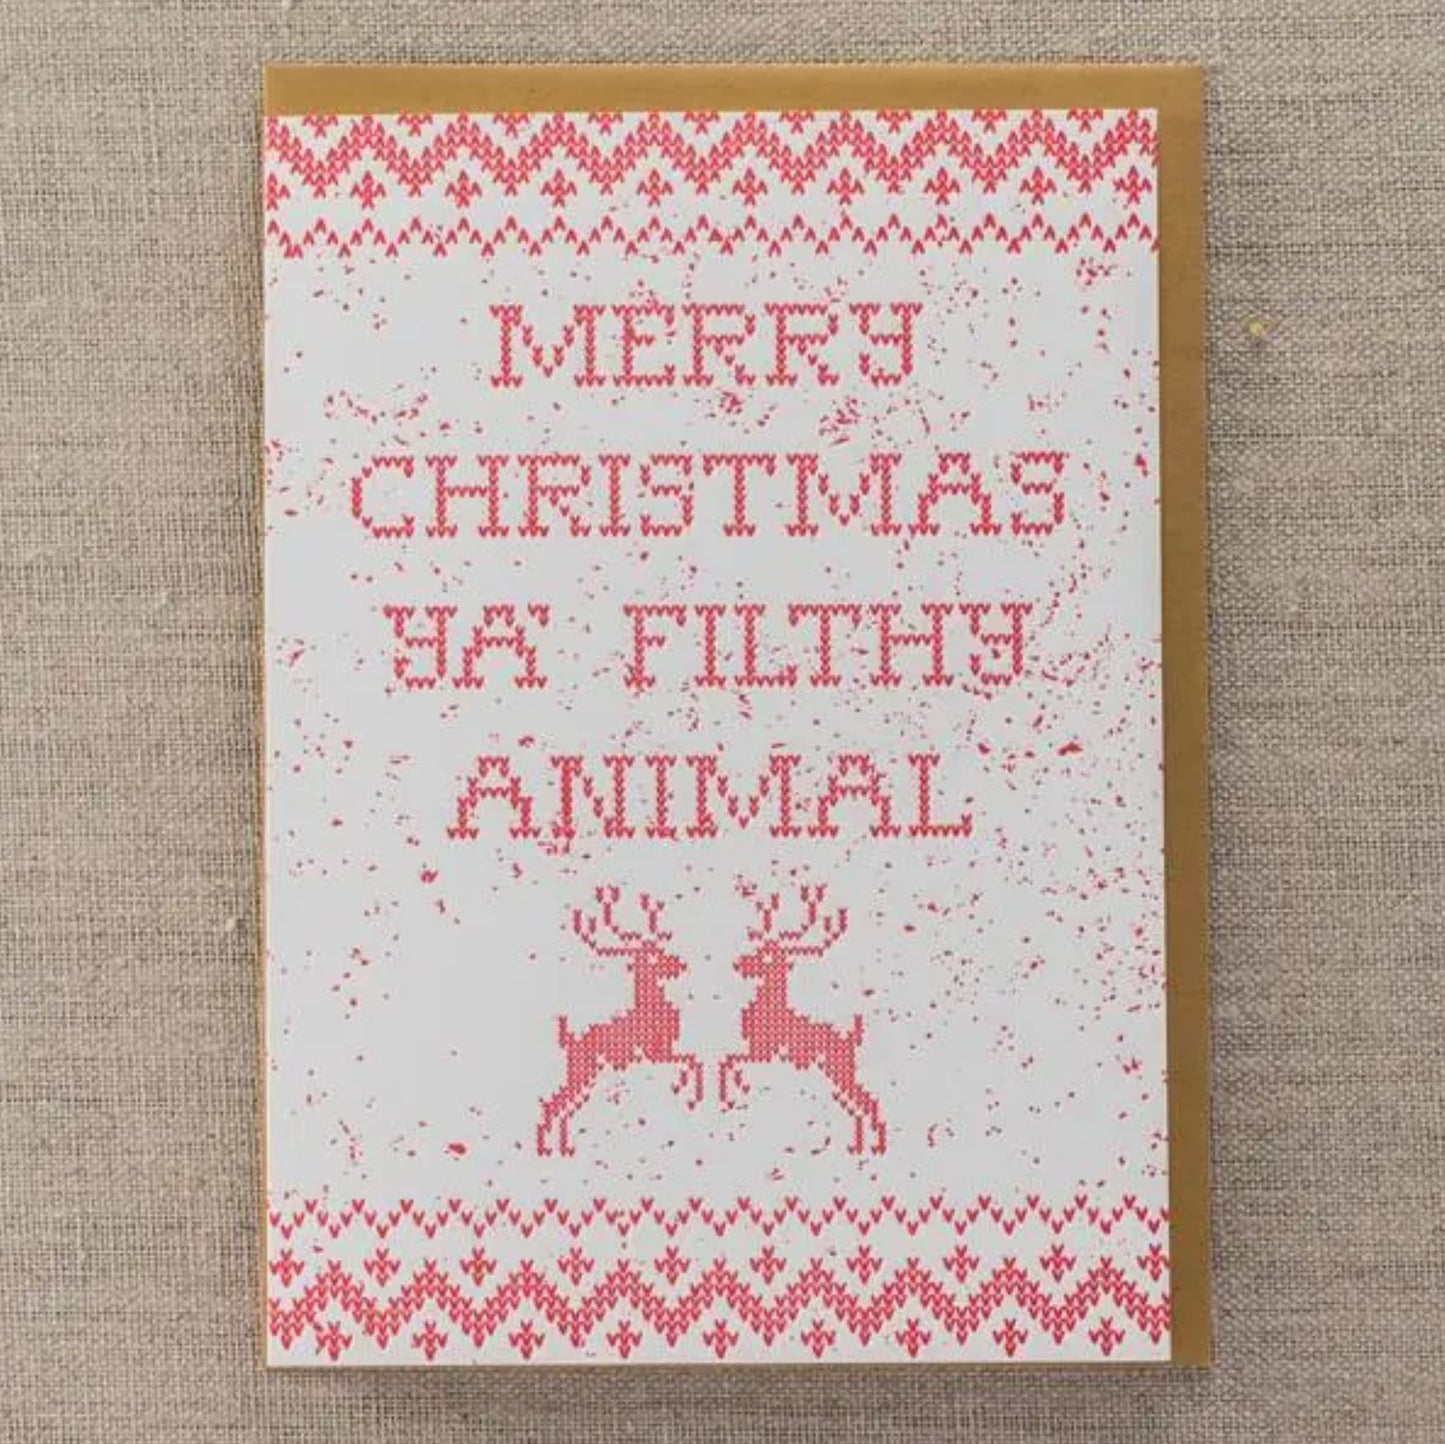 Filthy Animal Merry Christmas Card